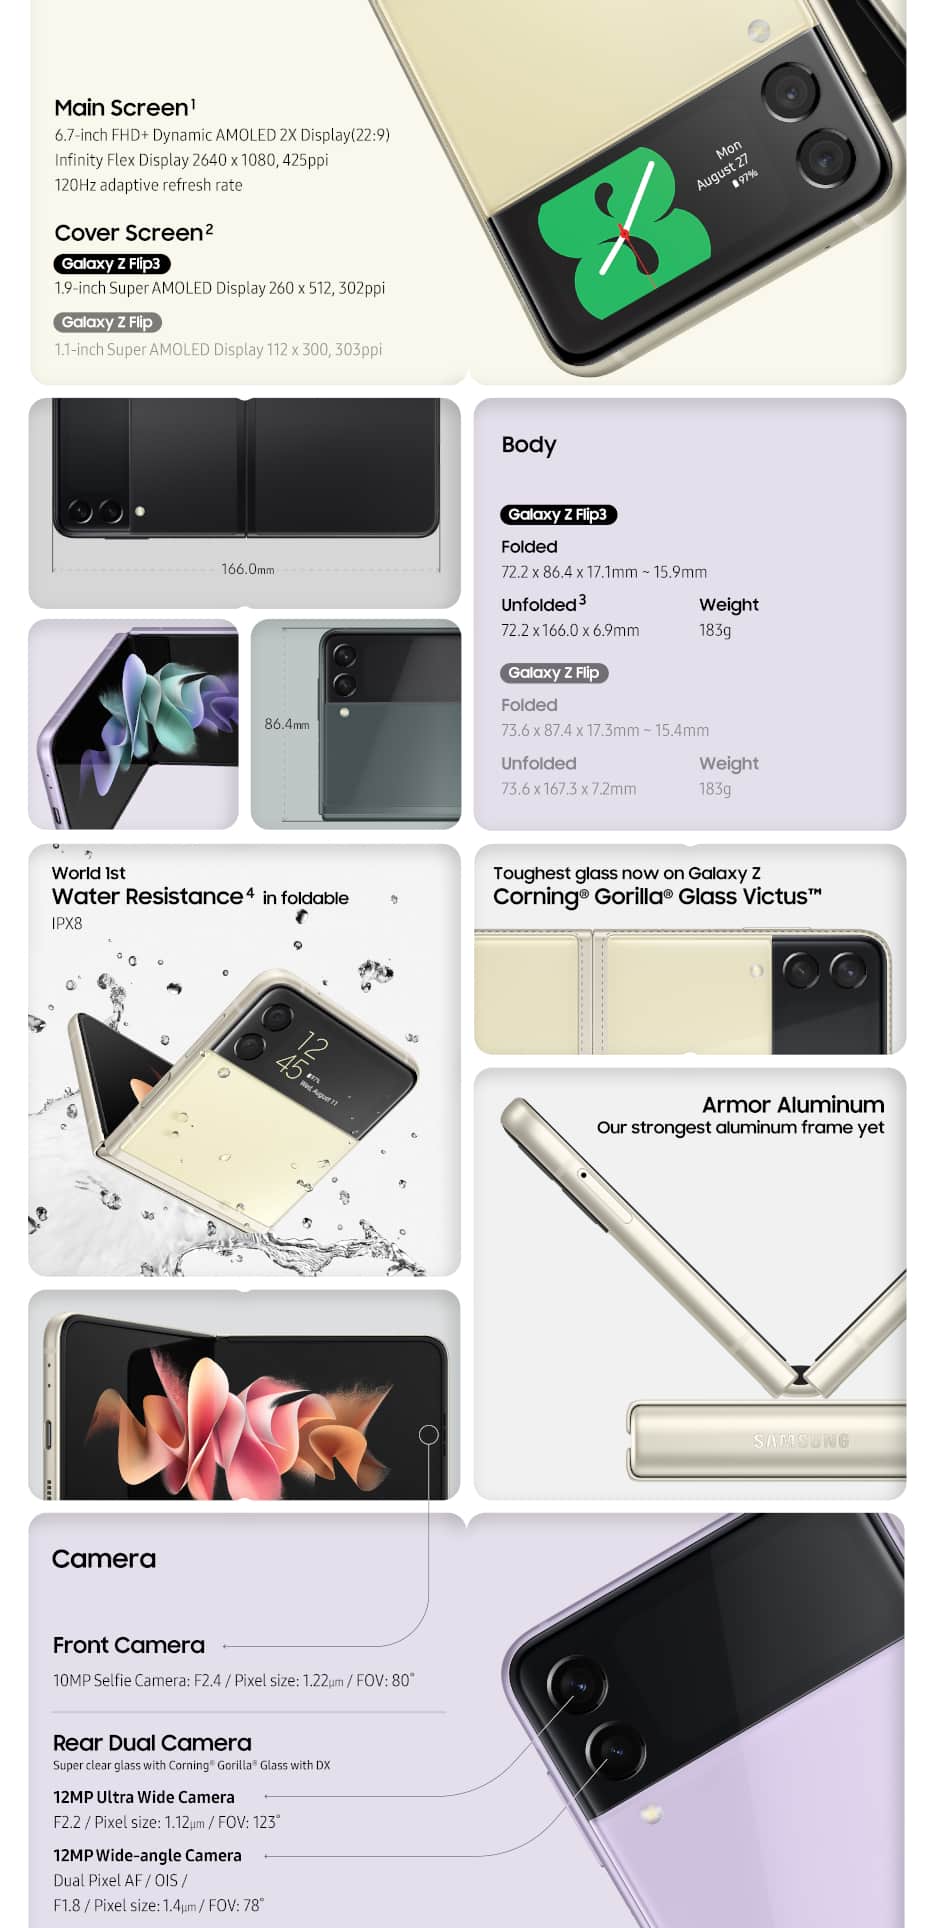 Galaxy Z Flip3 5G 発表、防水対応のコンパクトな縦折り5Gスマートフォン | phablet.jp (ファブレット.jp)